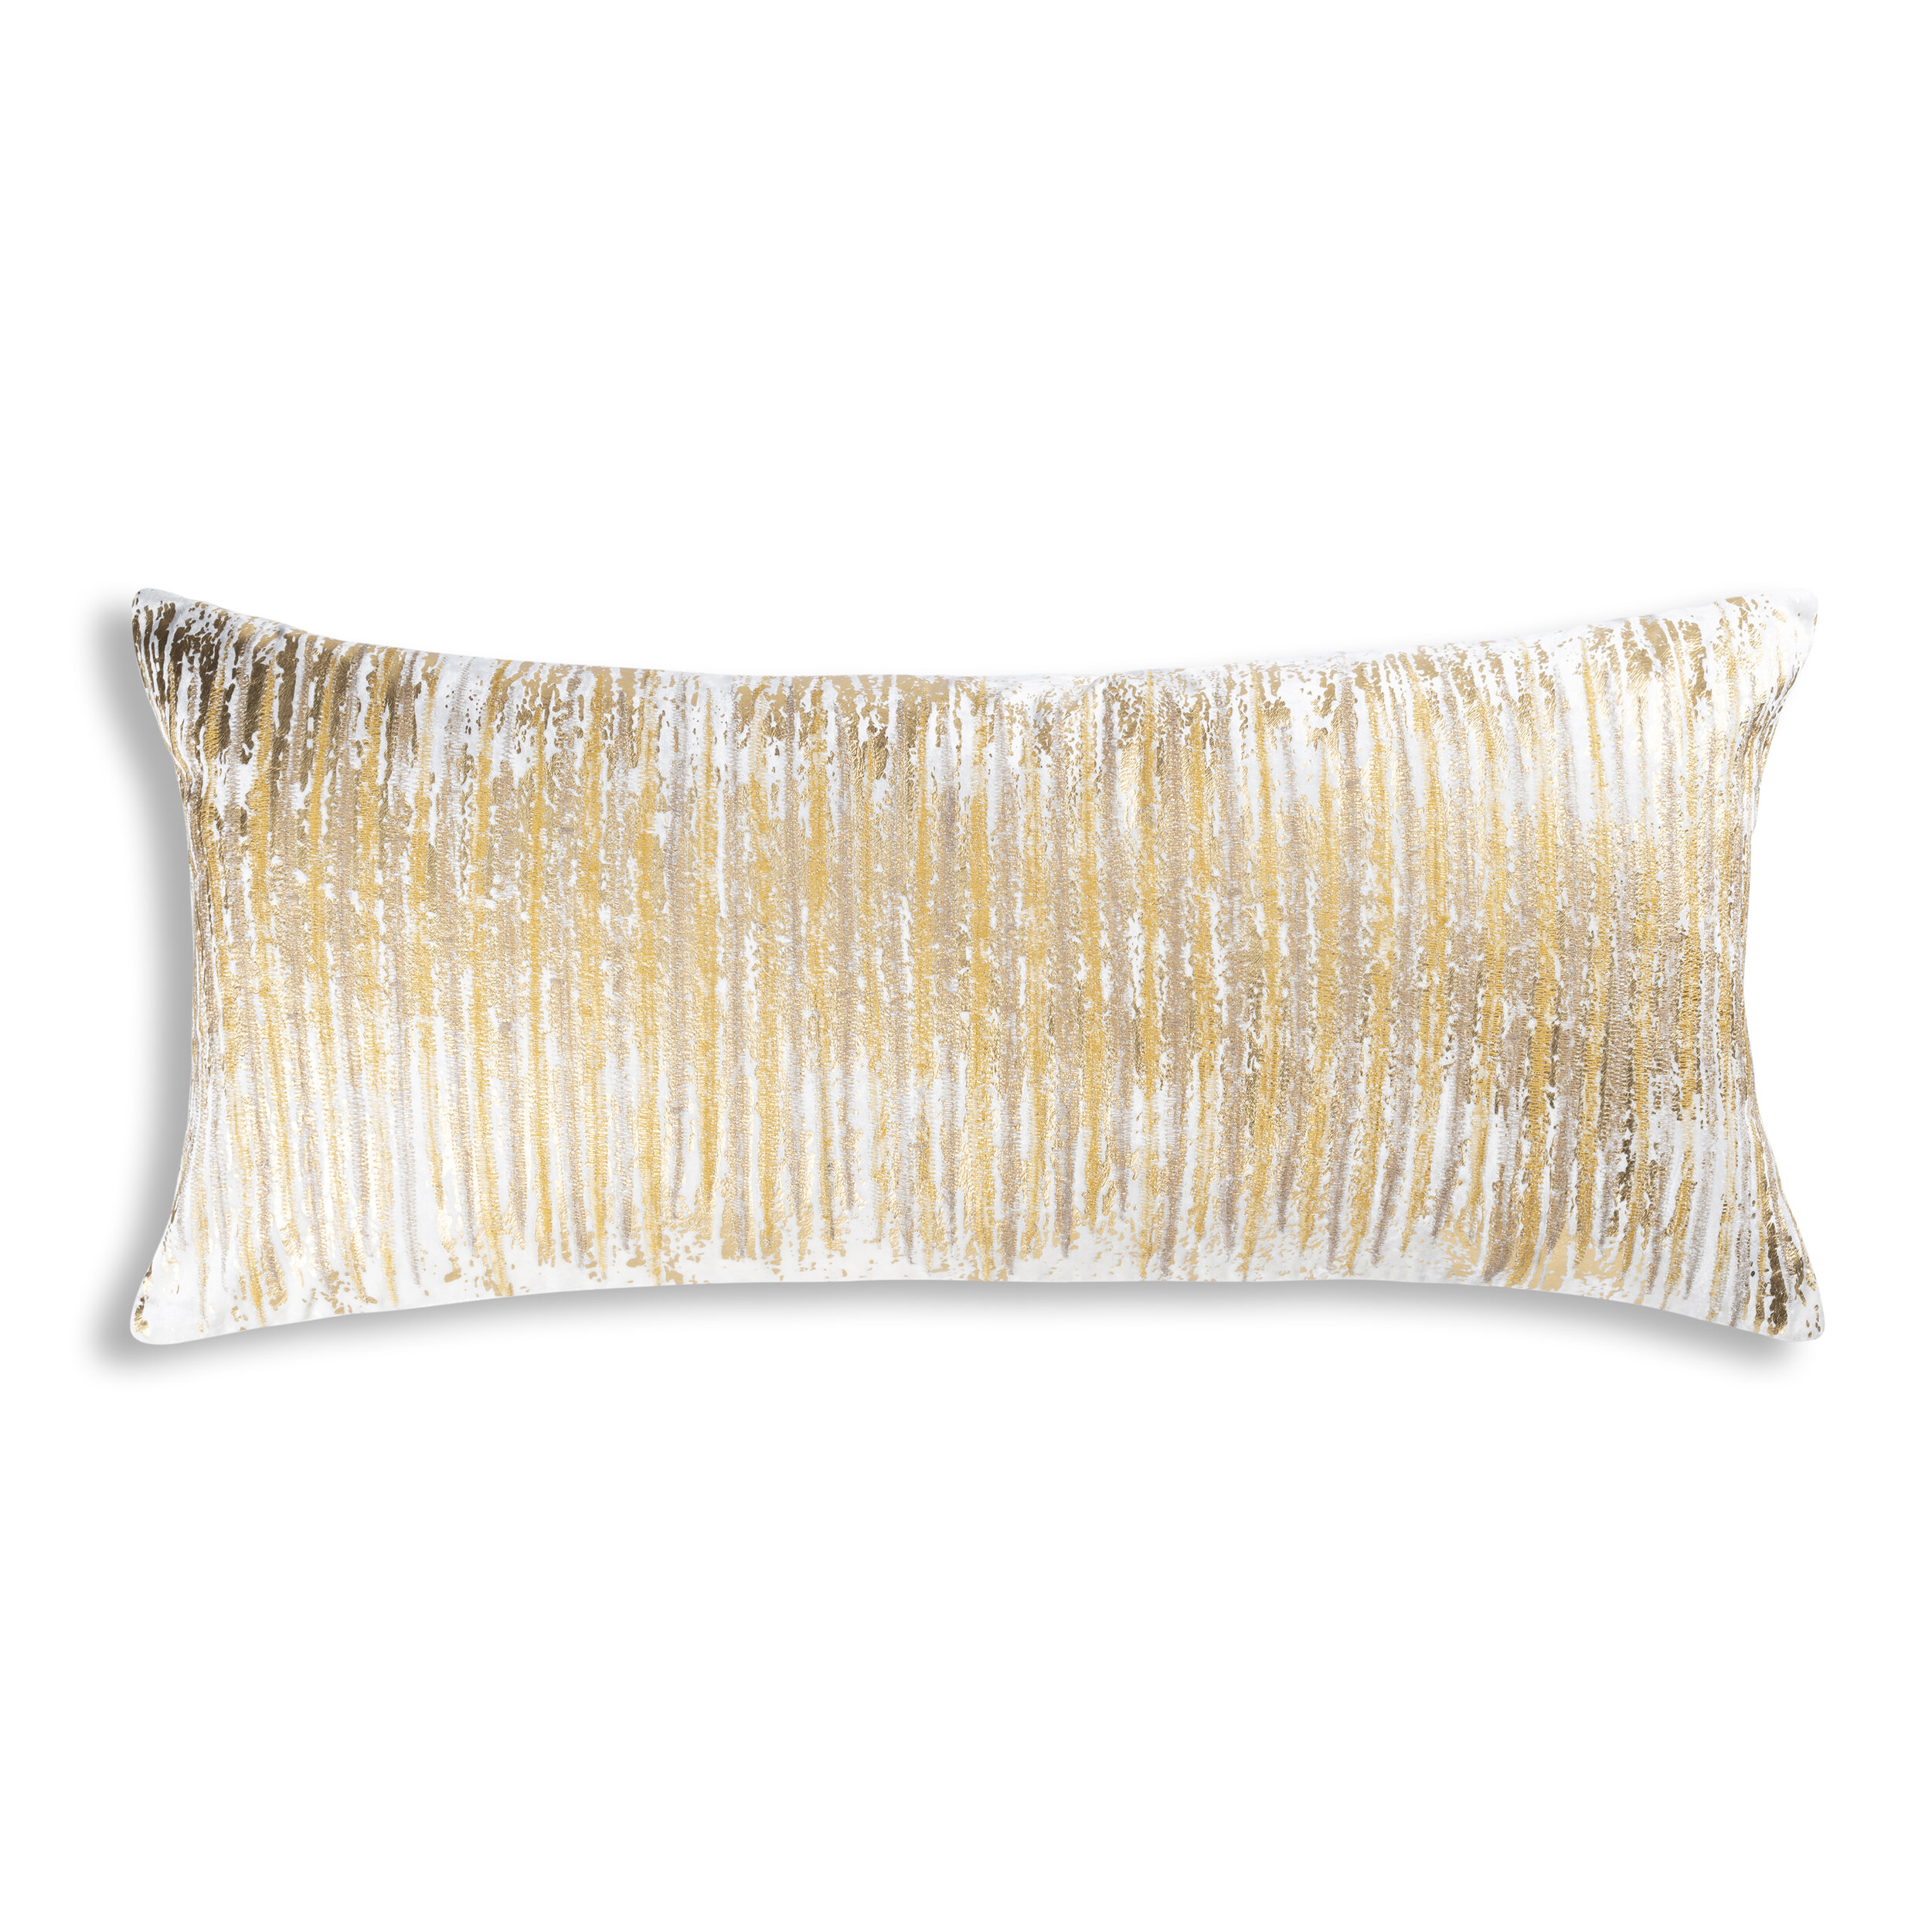 Shop Verona Lumbar Pillow - Gold Threads Ivory online - Marie Burgos  Collection — Shop Home Decorative Accessories Online | Marie Burgos  Collection